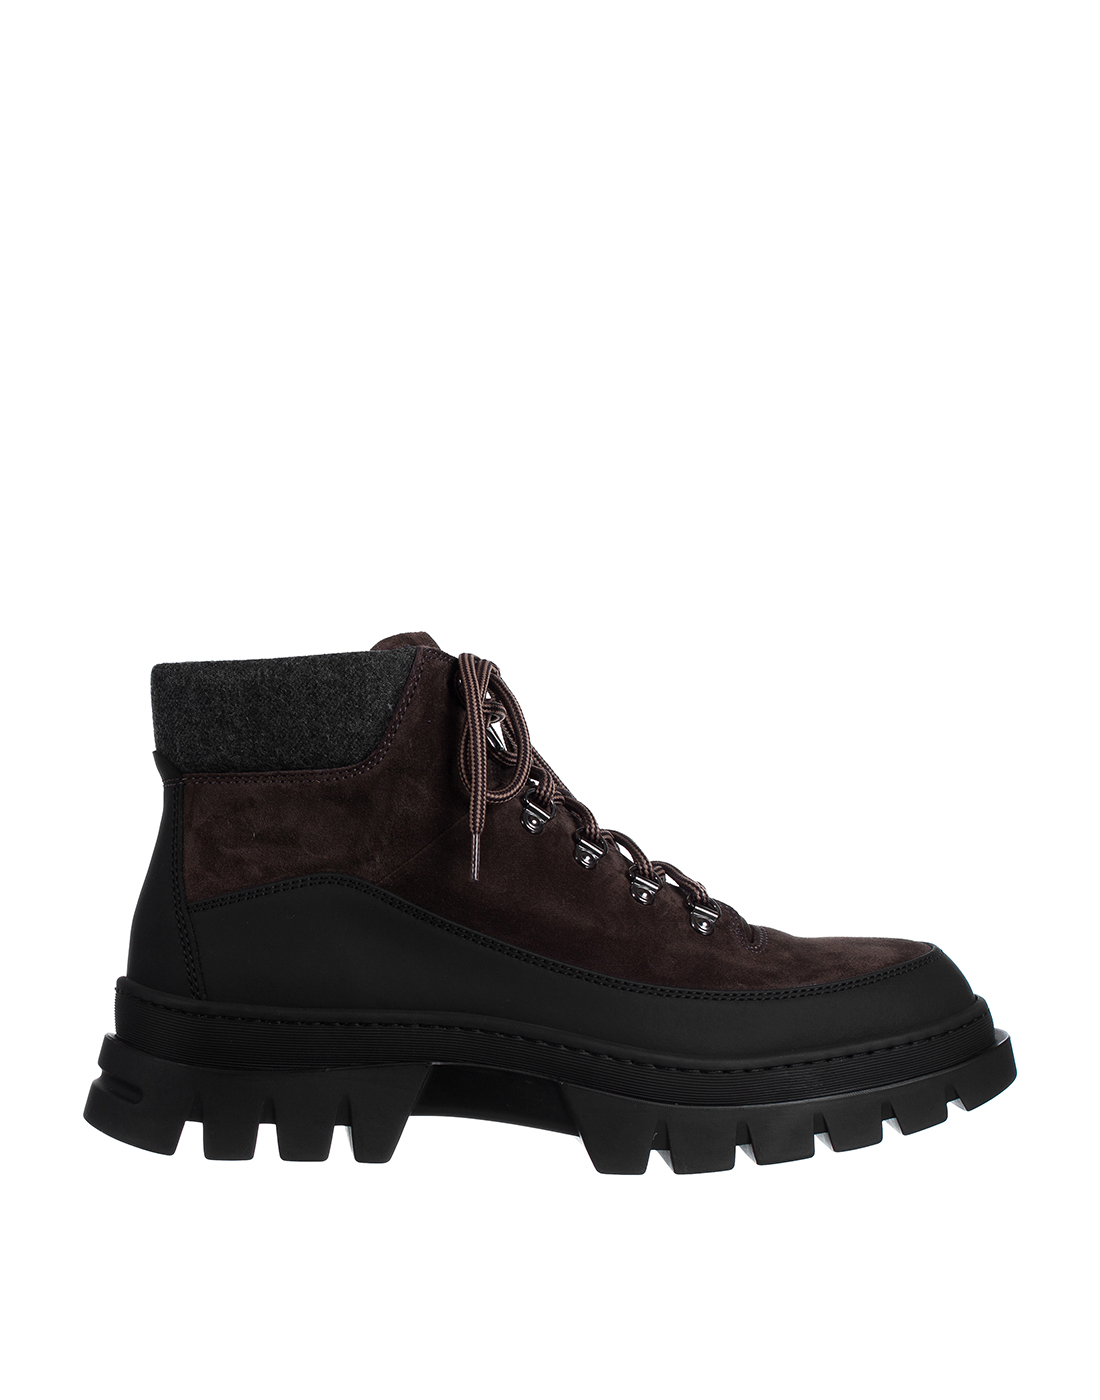 Ботинки коричневые мужские Henderson S83504.0-1